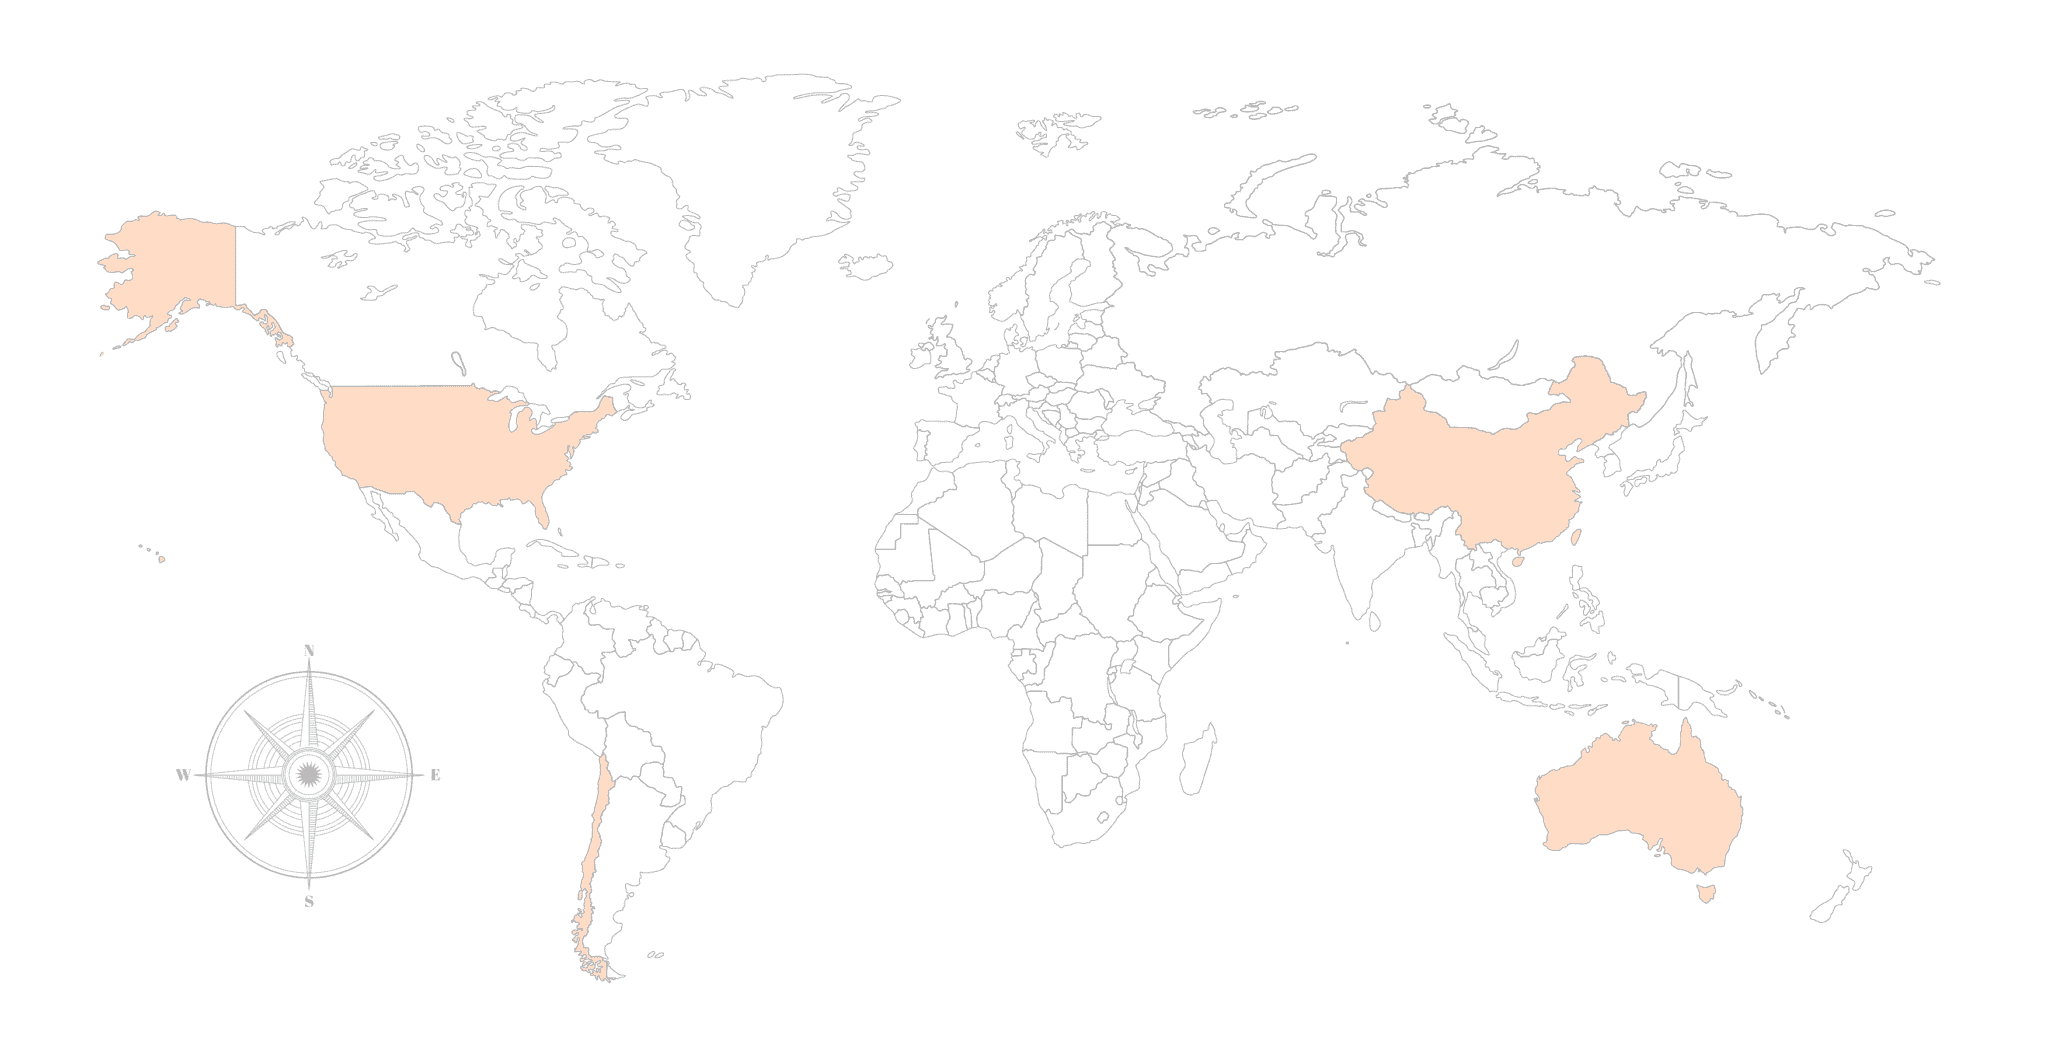 Sri Lanka's main coffee importers include United States, Australia, China, Maldives & Chile.